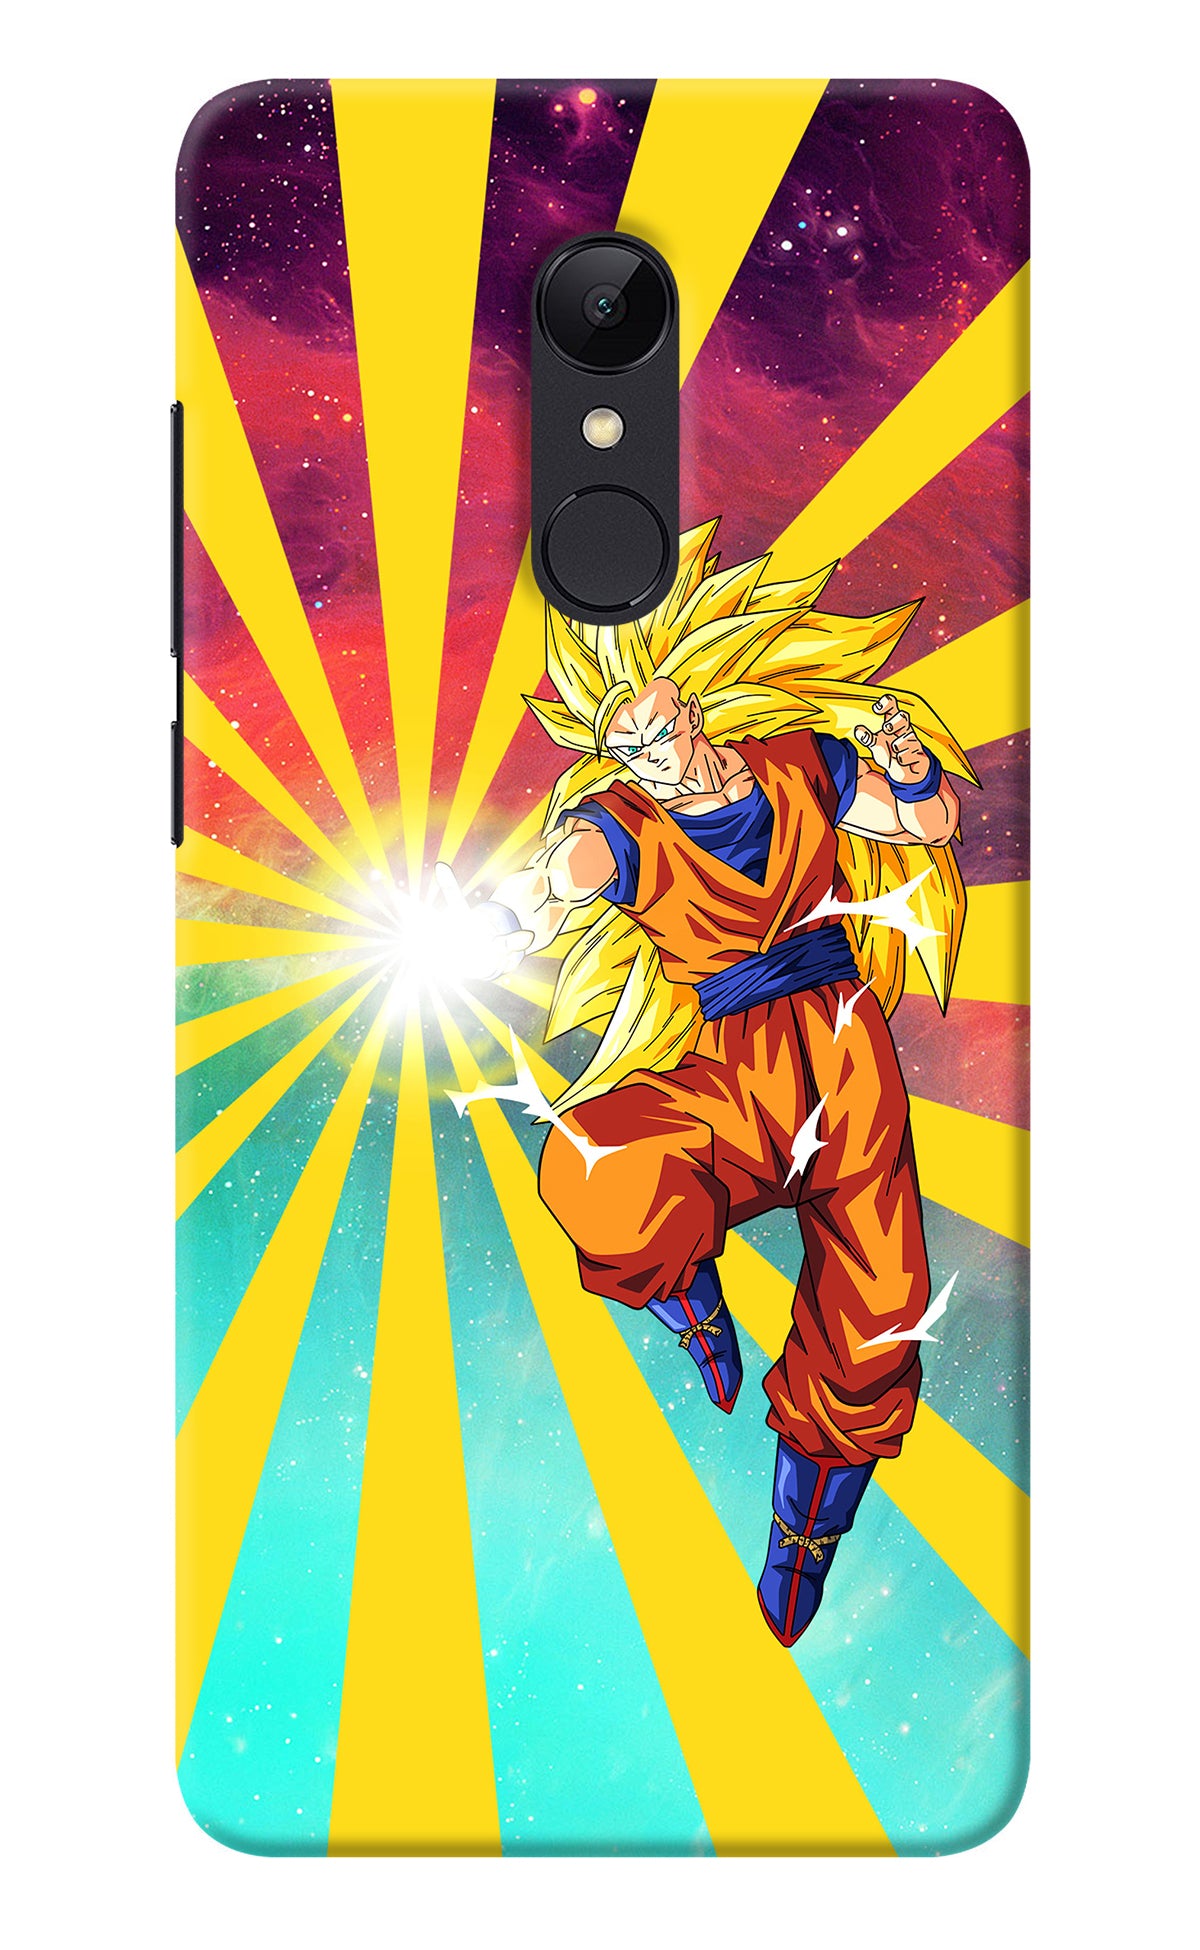 Goku Super Saiyan Redmi Note 4 Back Cover